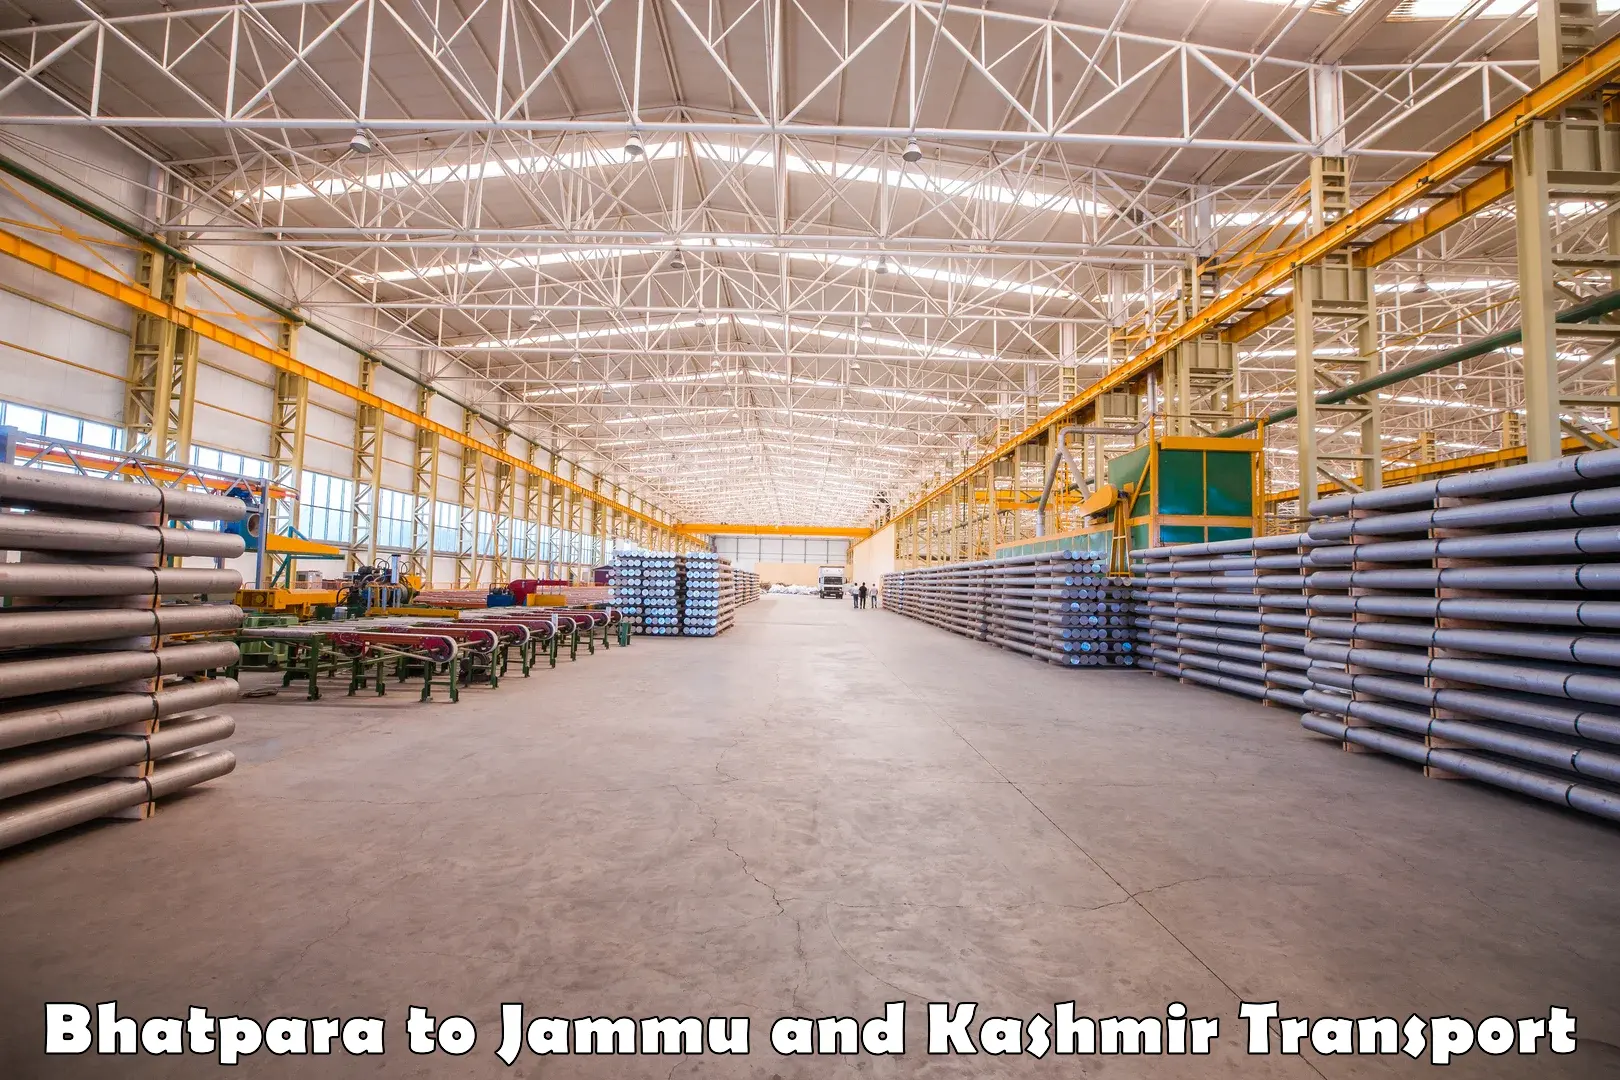 Truck transport companies in India Bhatpara to Kargil